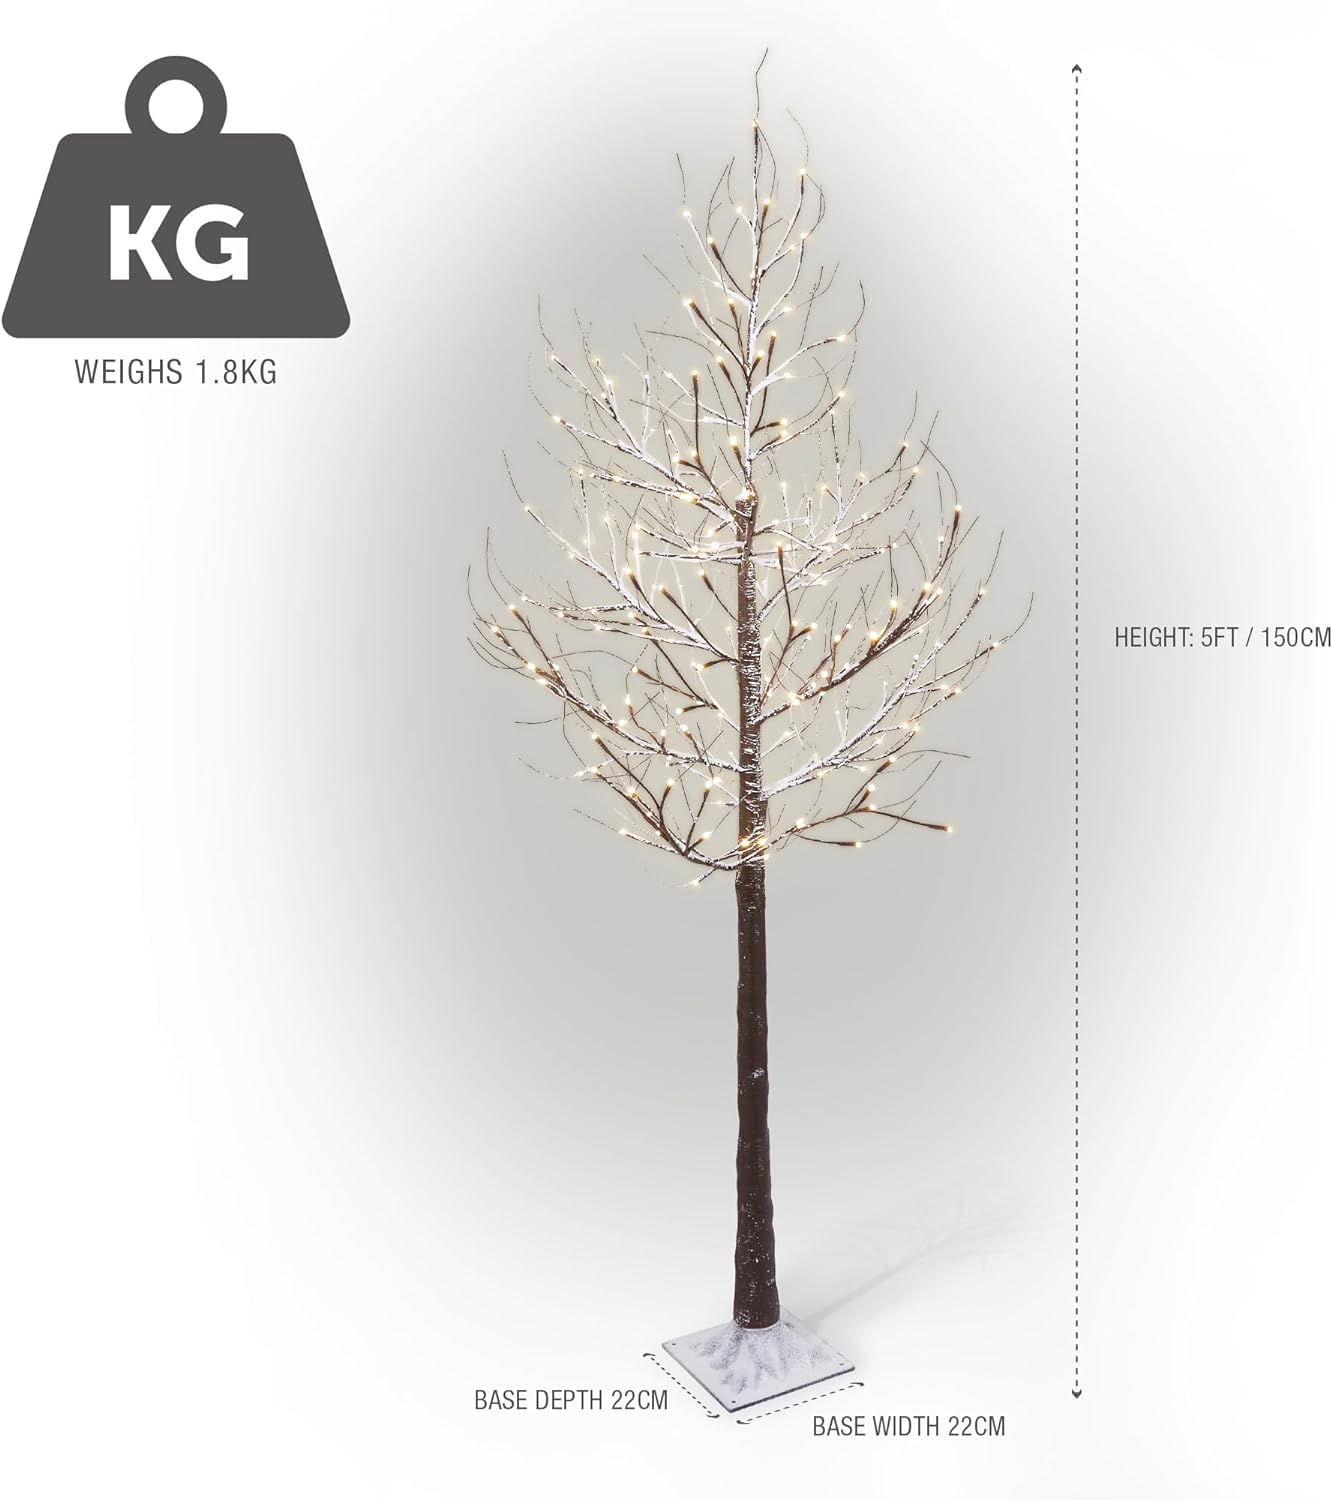 NETTA Birch Twig Tree with Warm White LED Lights - Brown